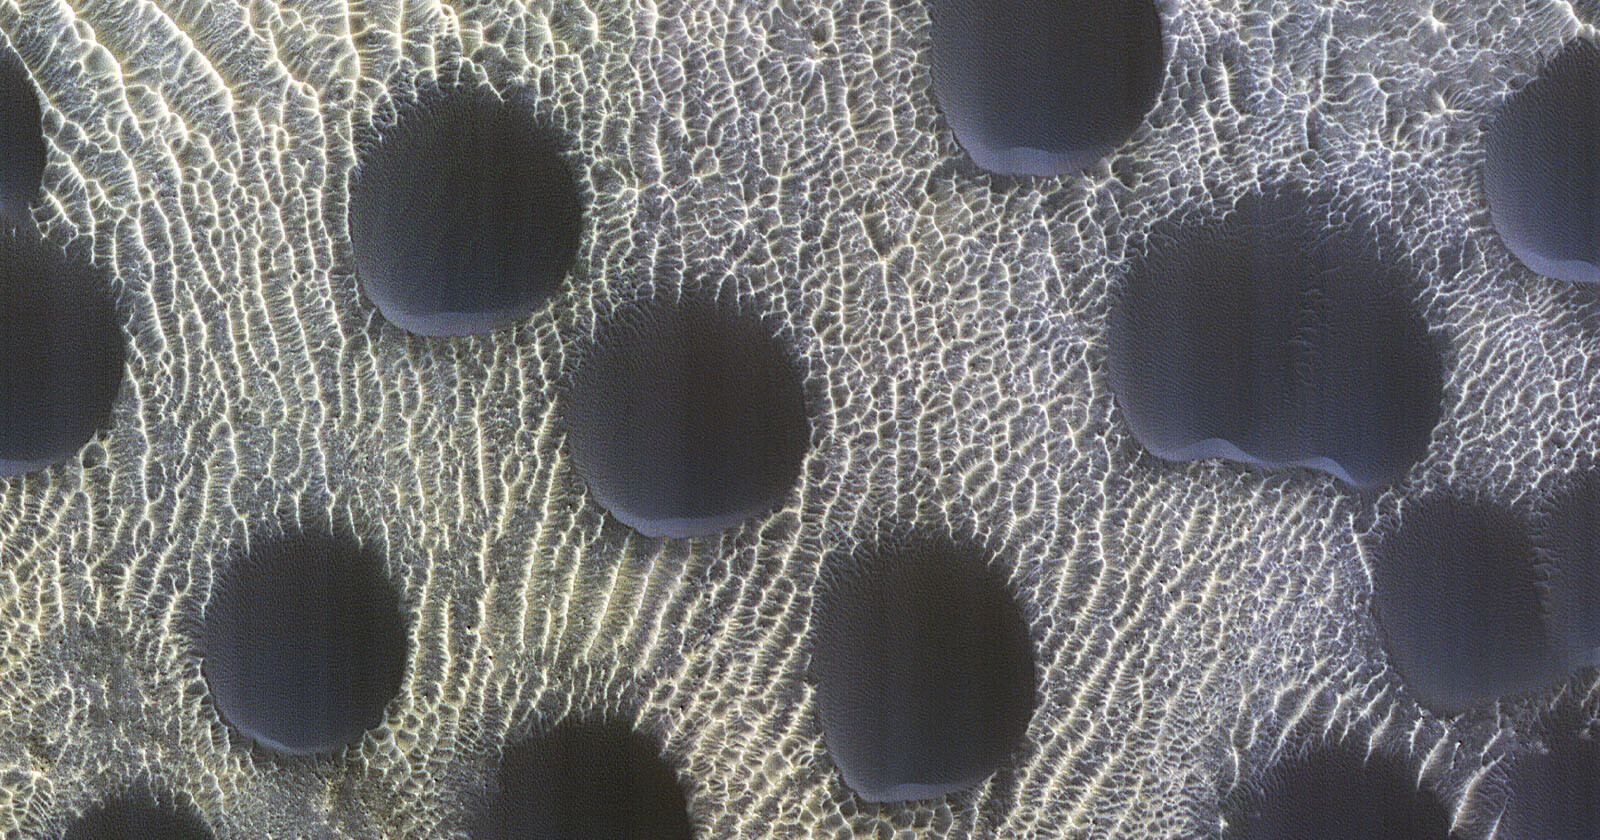  nasa release photos strange circular sands dunes mars 